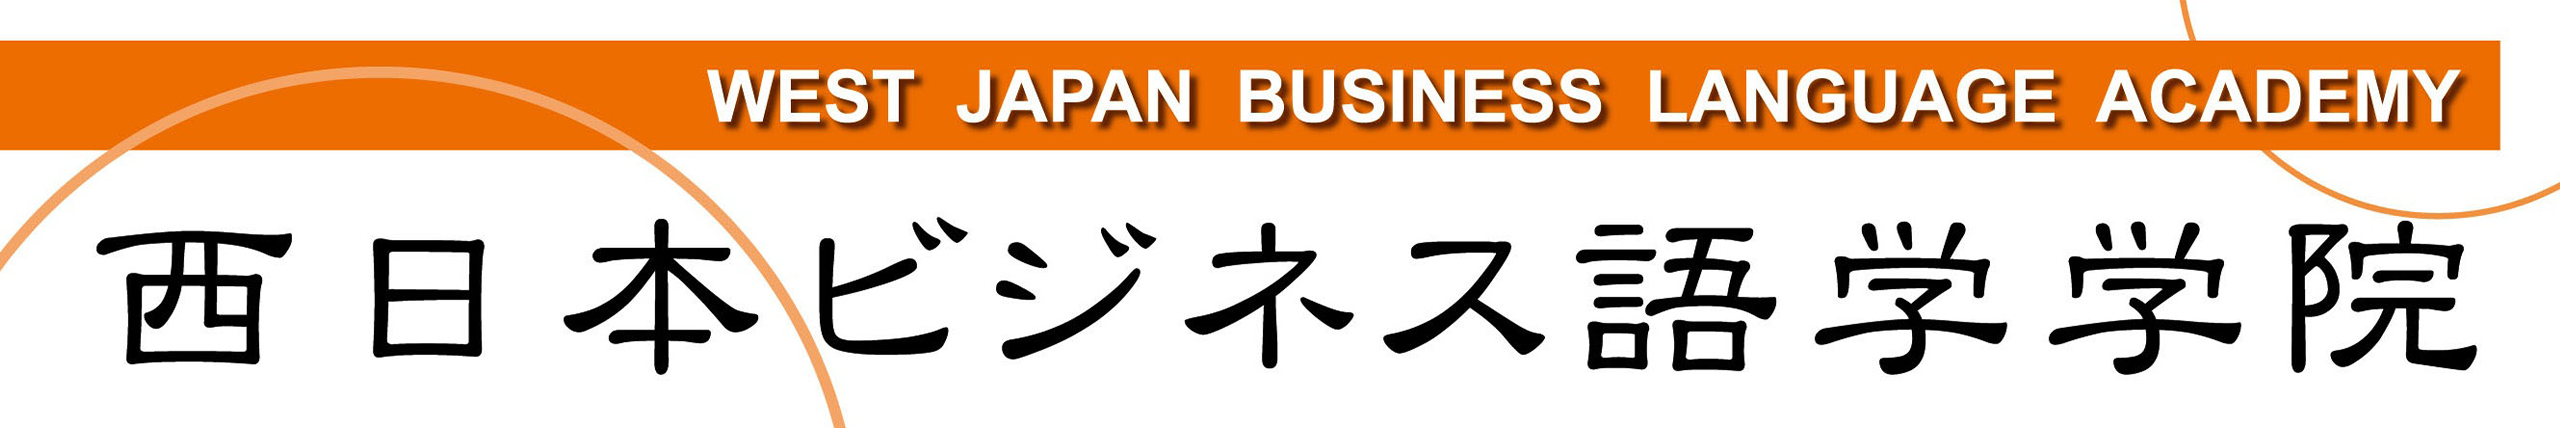 WEST JAPAN BUSINESS LANGUAGE ACADEMY